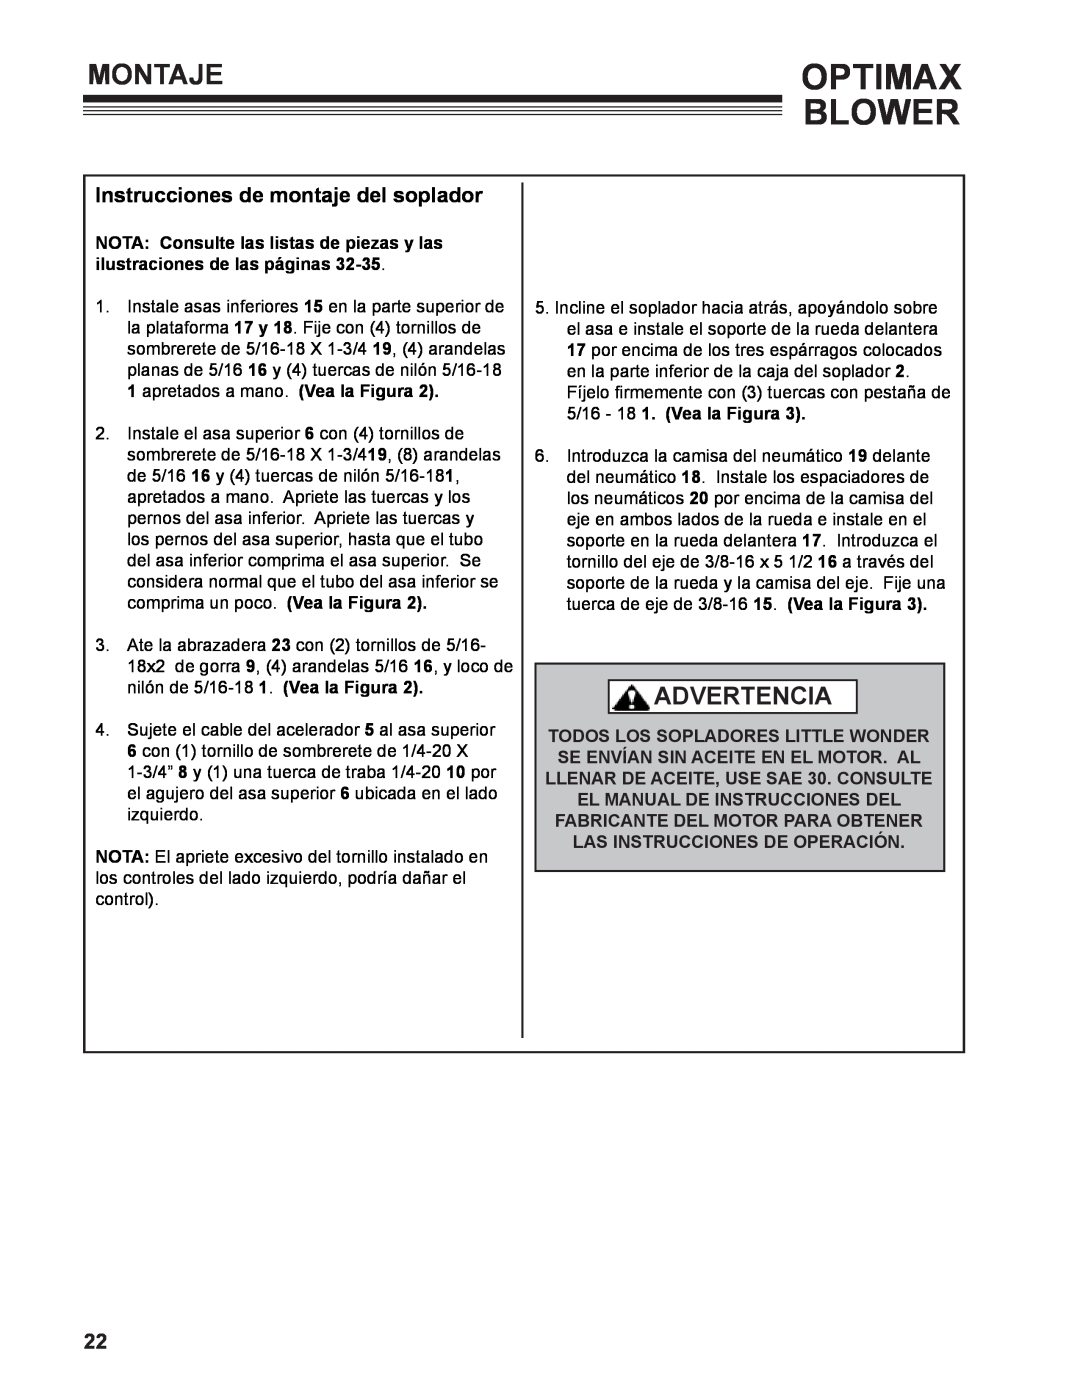 Little Wonder LB901-00-01 technical manual Montaje, Instrucciones de montaje del soplador, Optimax Blower, Advertencia 